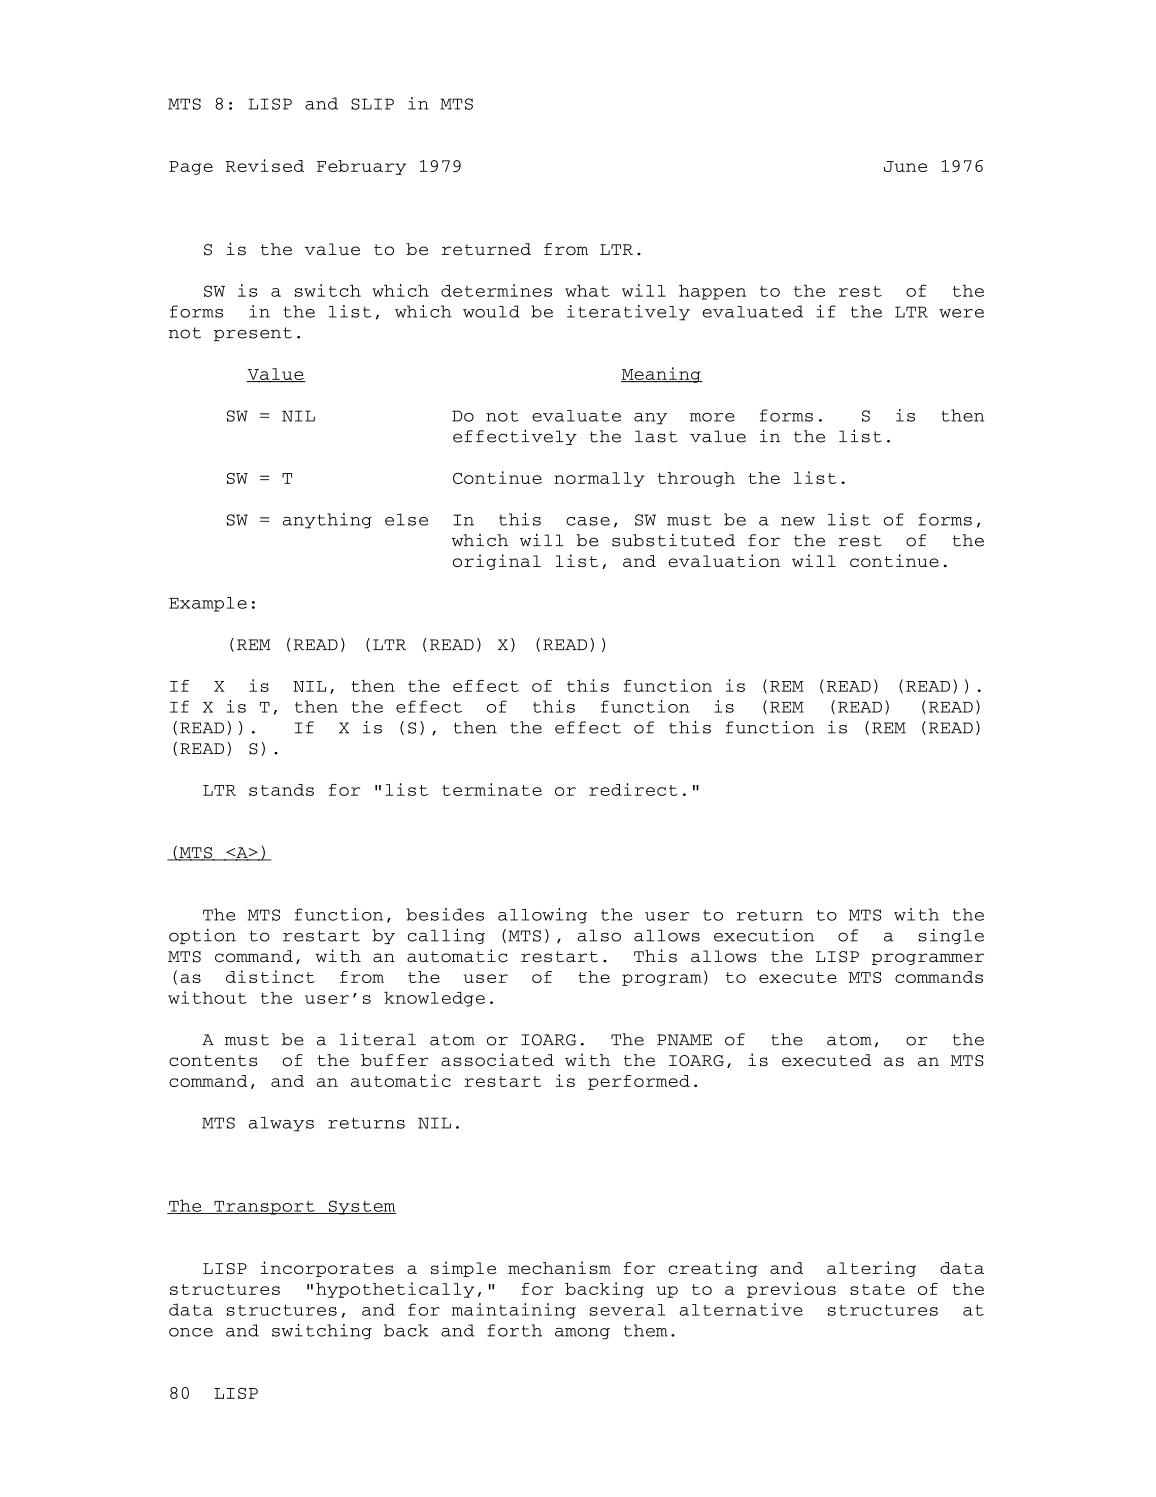 MTS Volume 8 - LISP and SLIP page 80